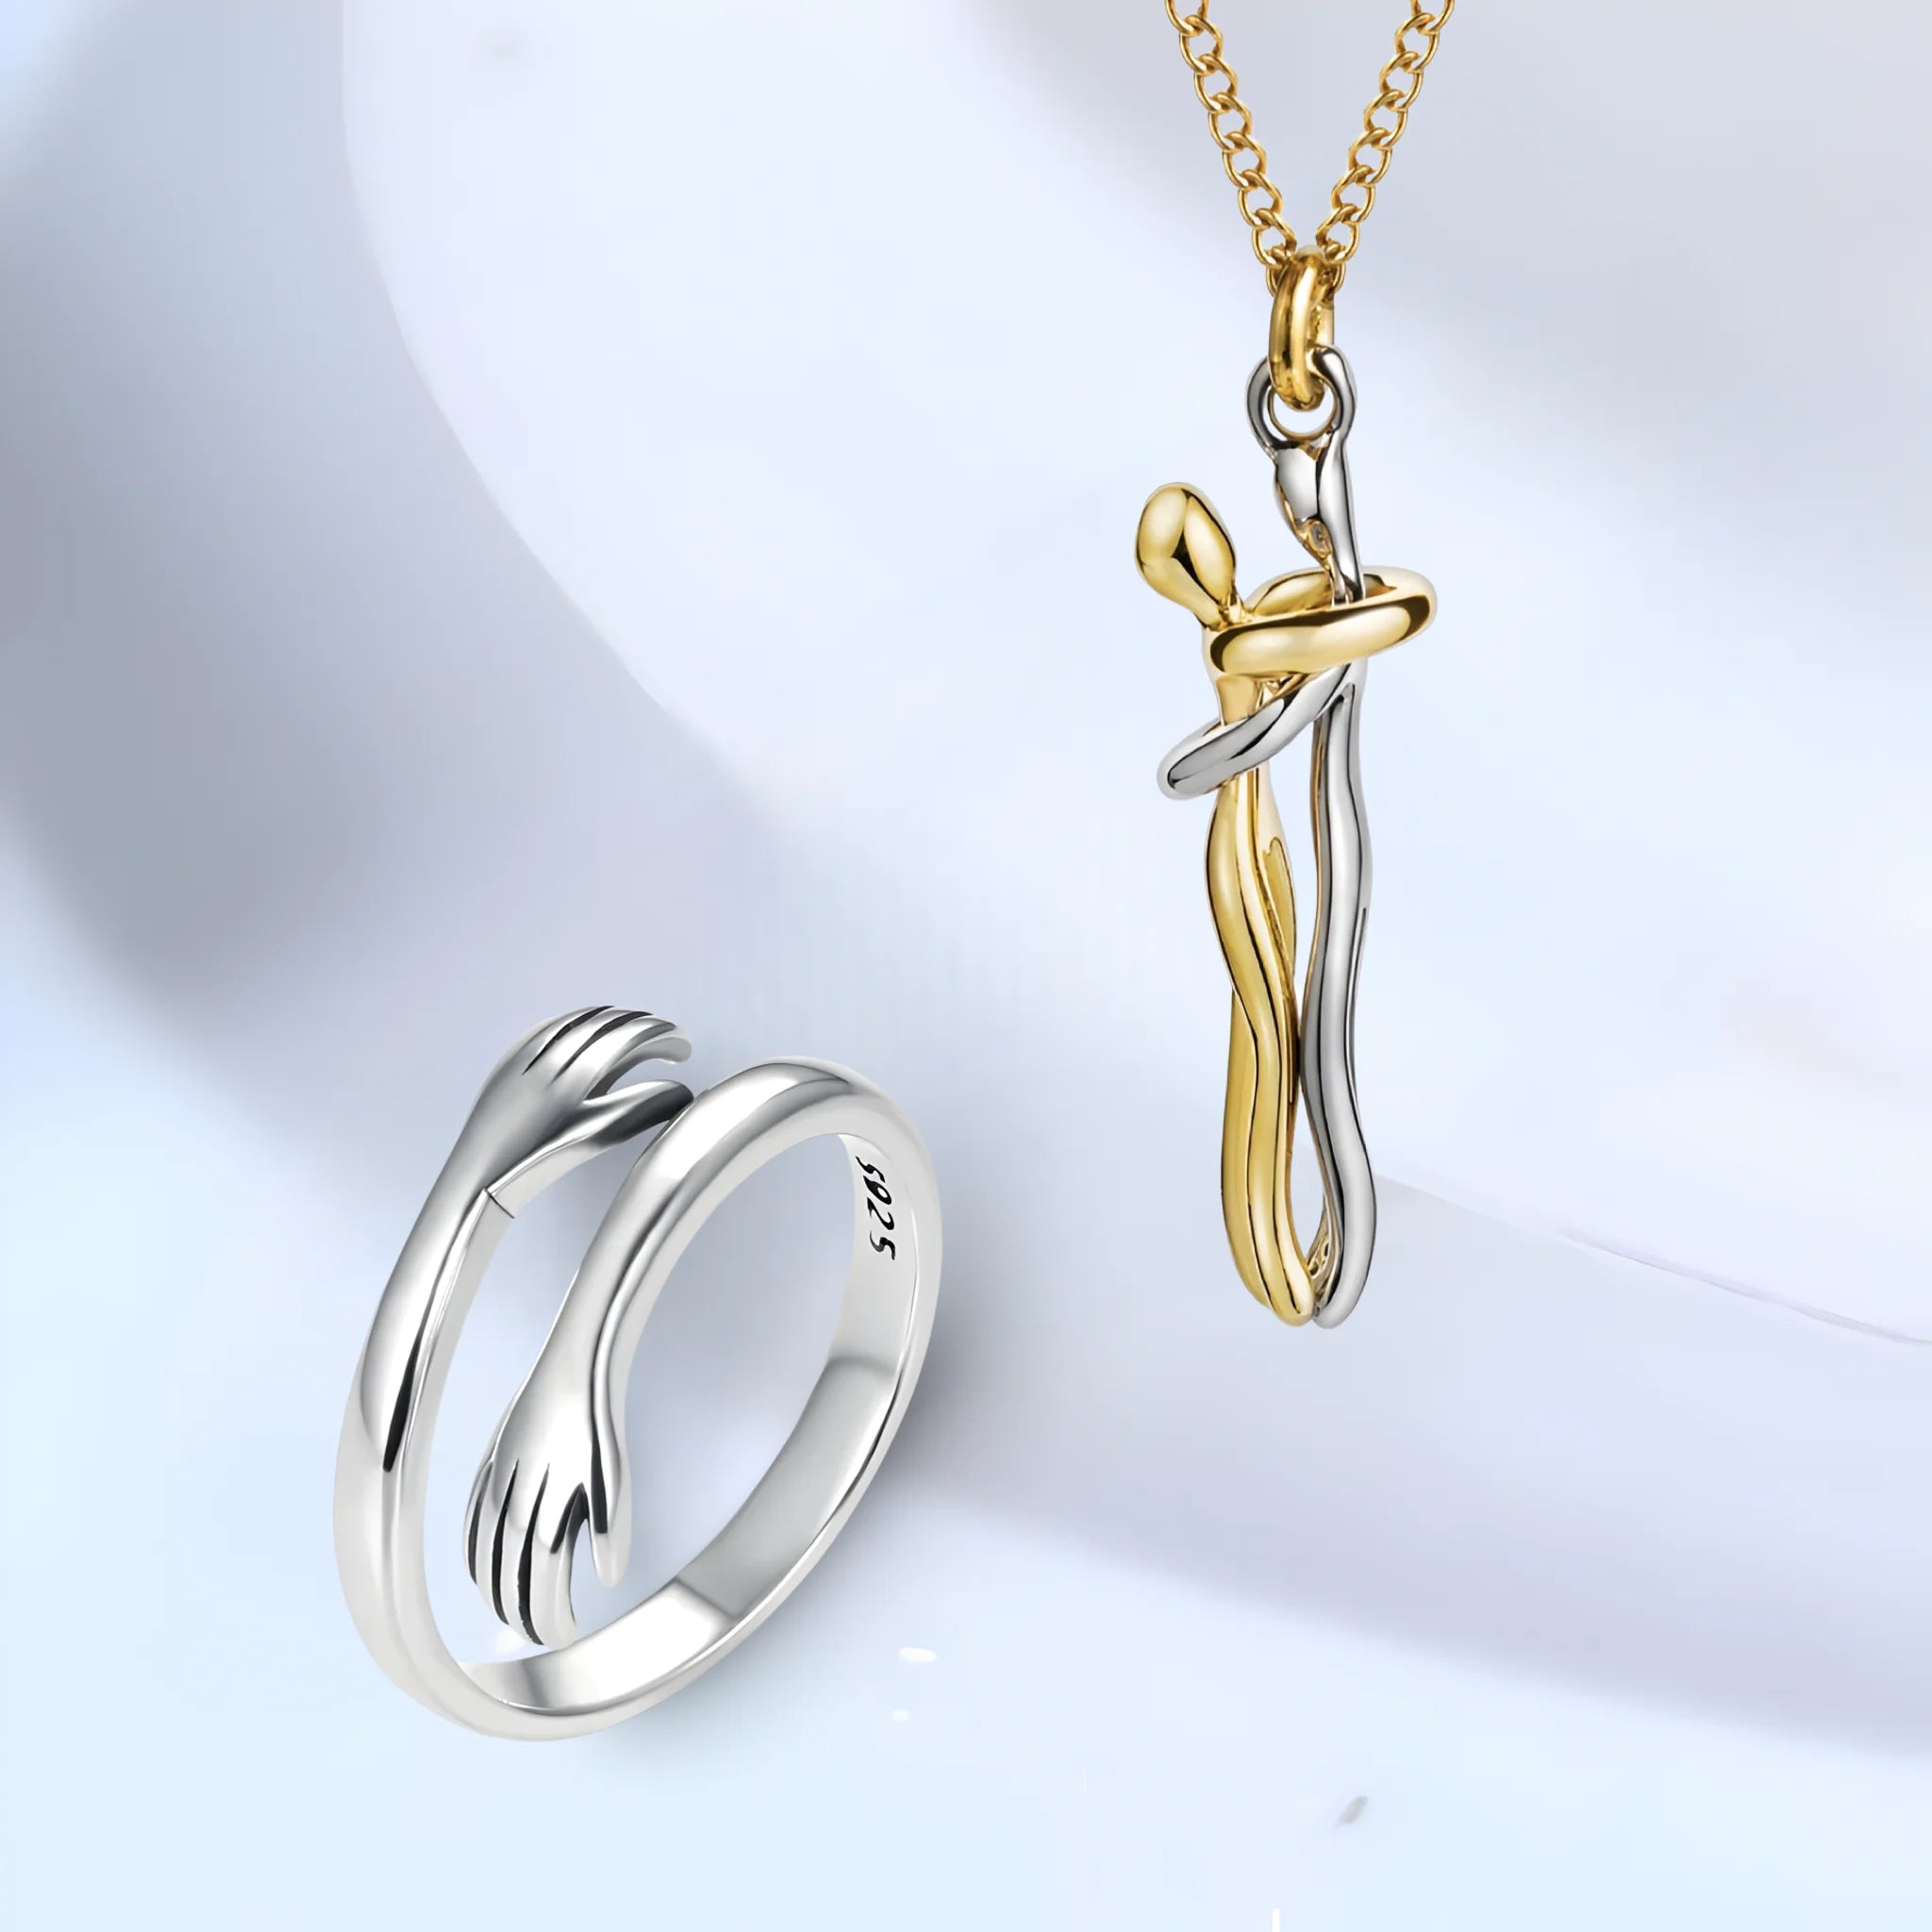 KnuffelKetting™️ - Uniek & elegant GRATIS RING Knuffel Ketting - Zilver & Goud + GRATIS Zilveren